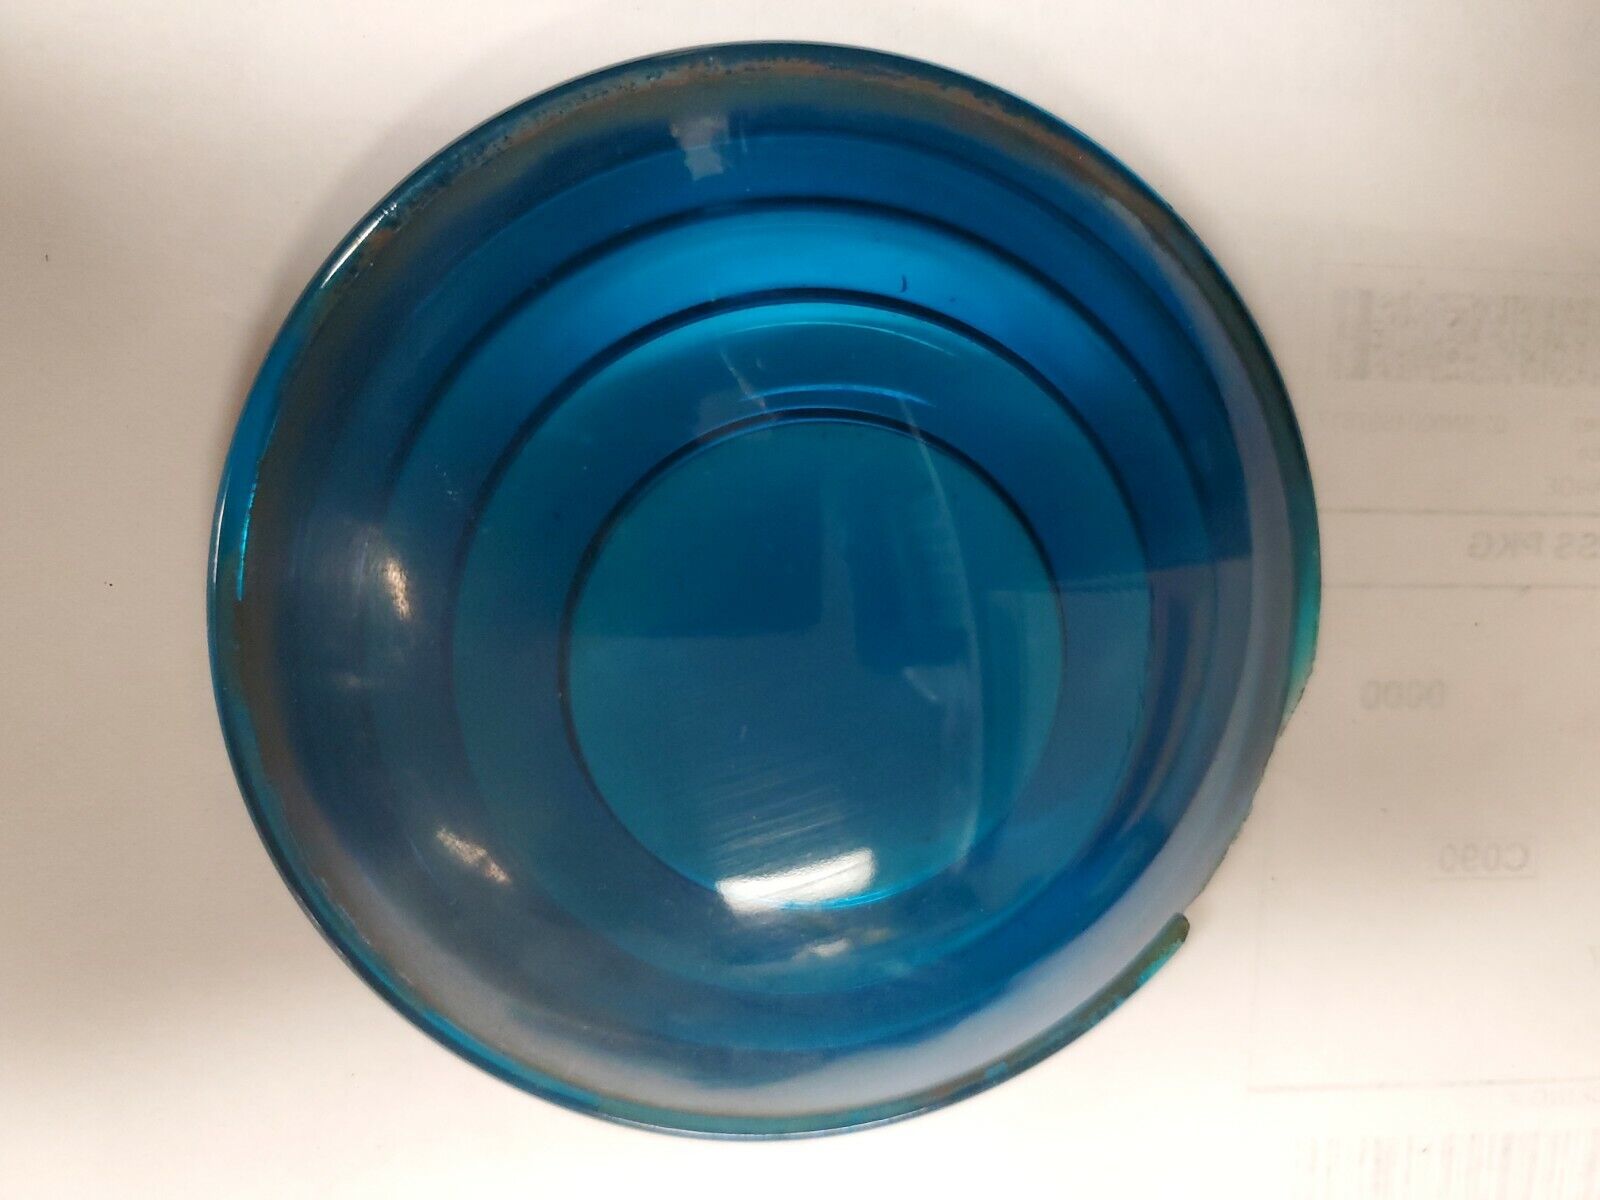 ORIGINAL Kopp Glass Blue 4 1/2” Railroad Railway Lantern Lens 4.5 IN 3 FL Safety